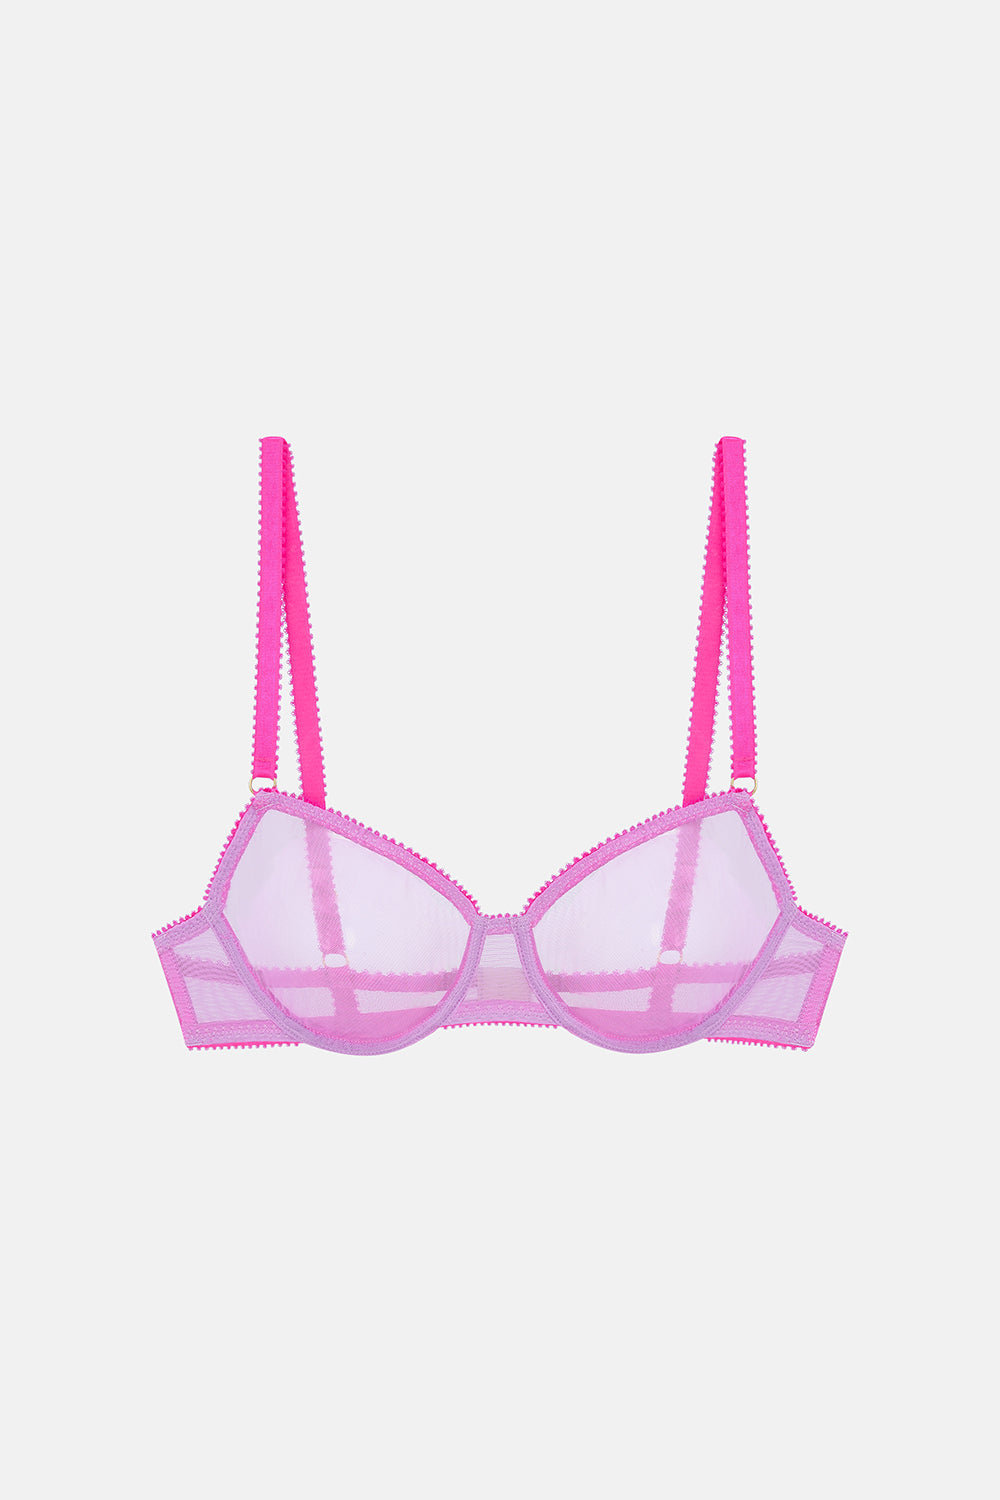 Victoria Secret PINK Love Pink Writing Graphic Pattern Bra Size 32A